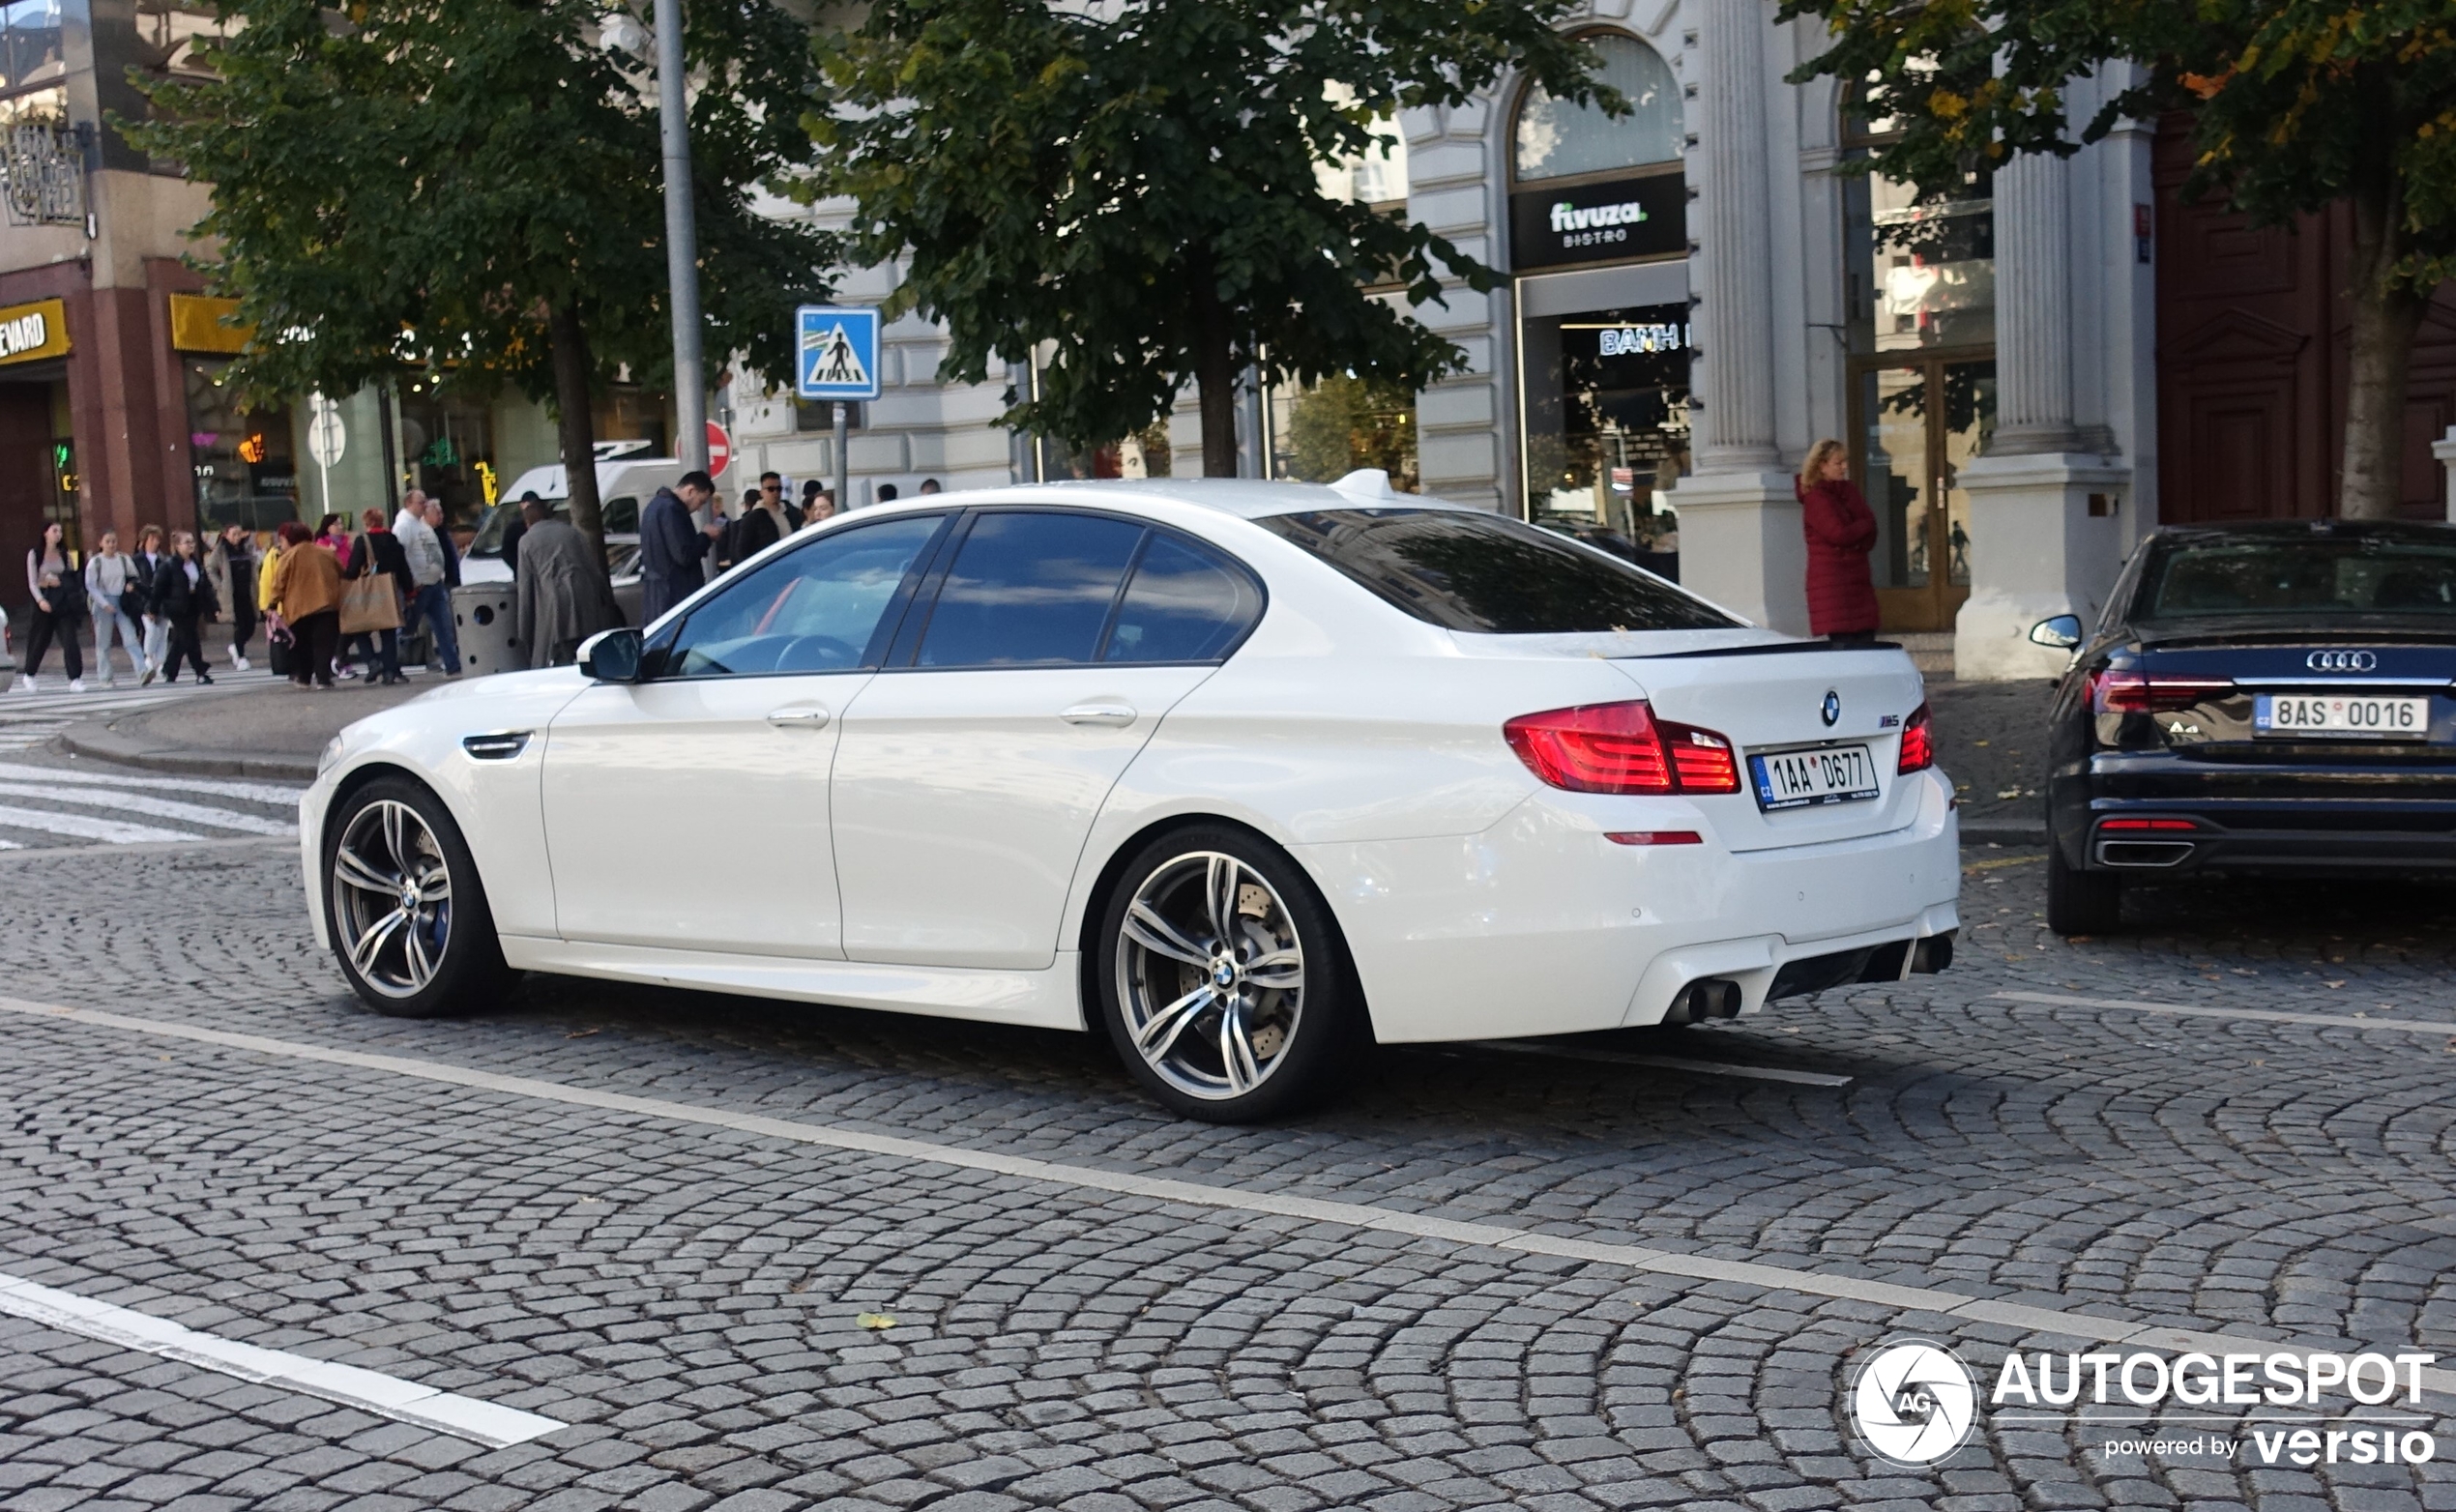 BMW M5 F10 Performance Edition 2014 - 25 September 2022 - Autogespot